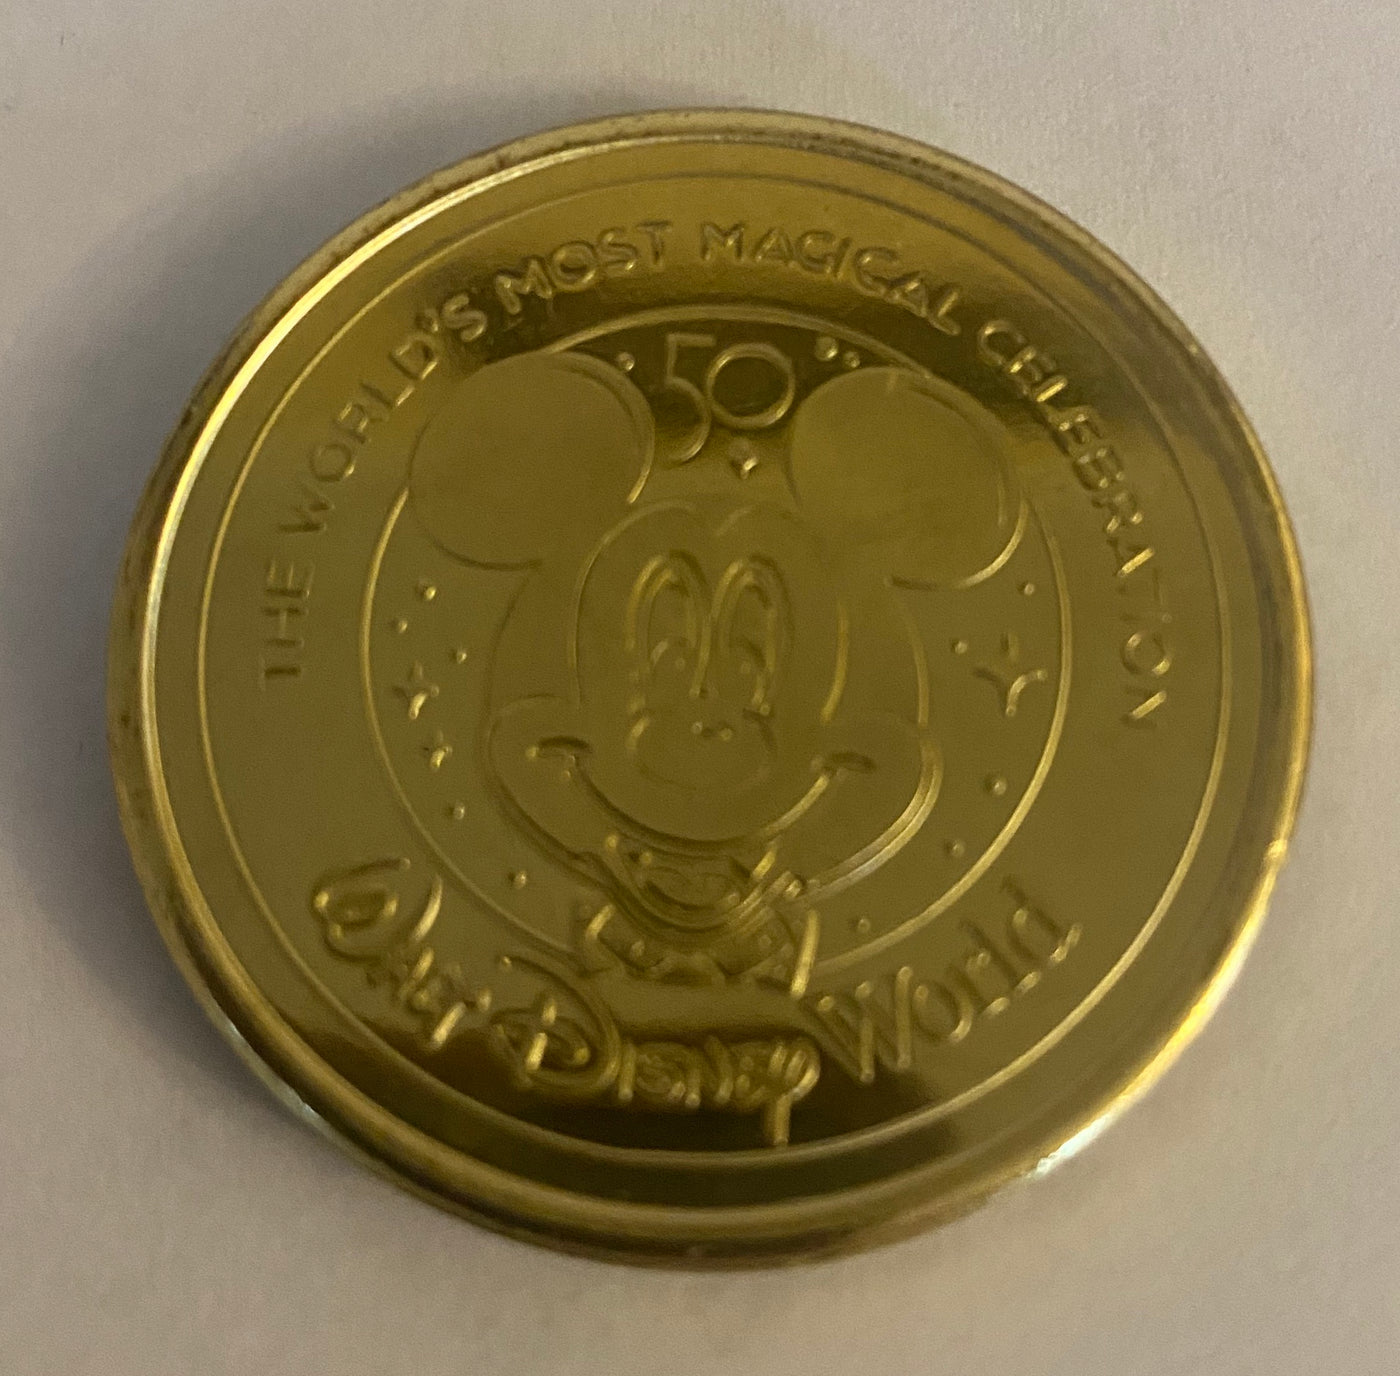 Disney Parks WDW 50th Magical Celebration HeiHei Moana Coin Medallion New